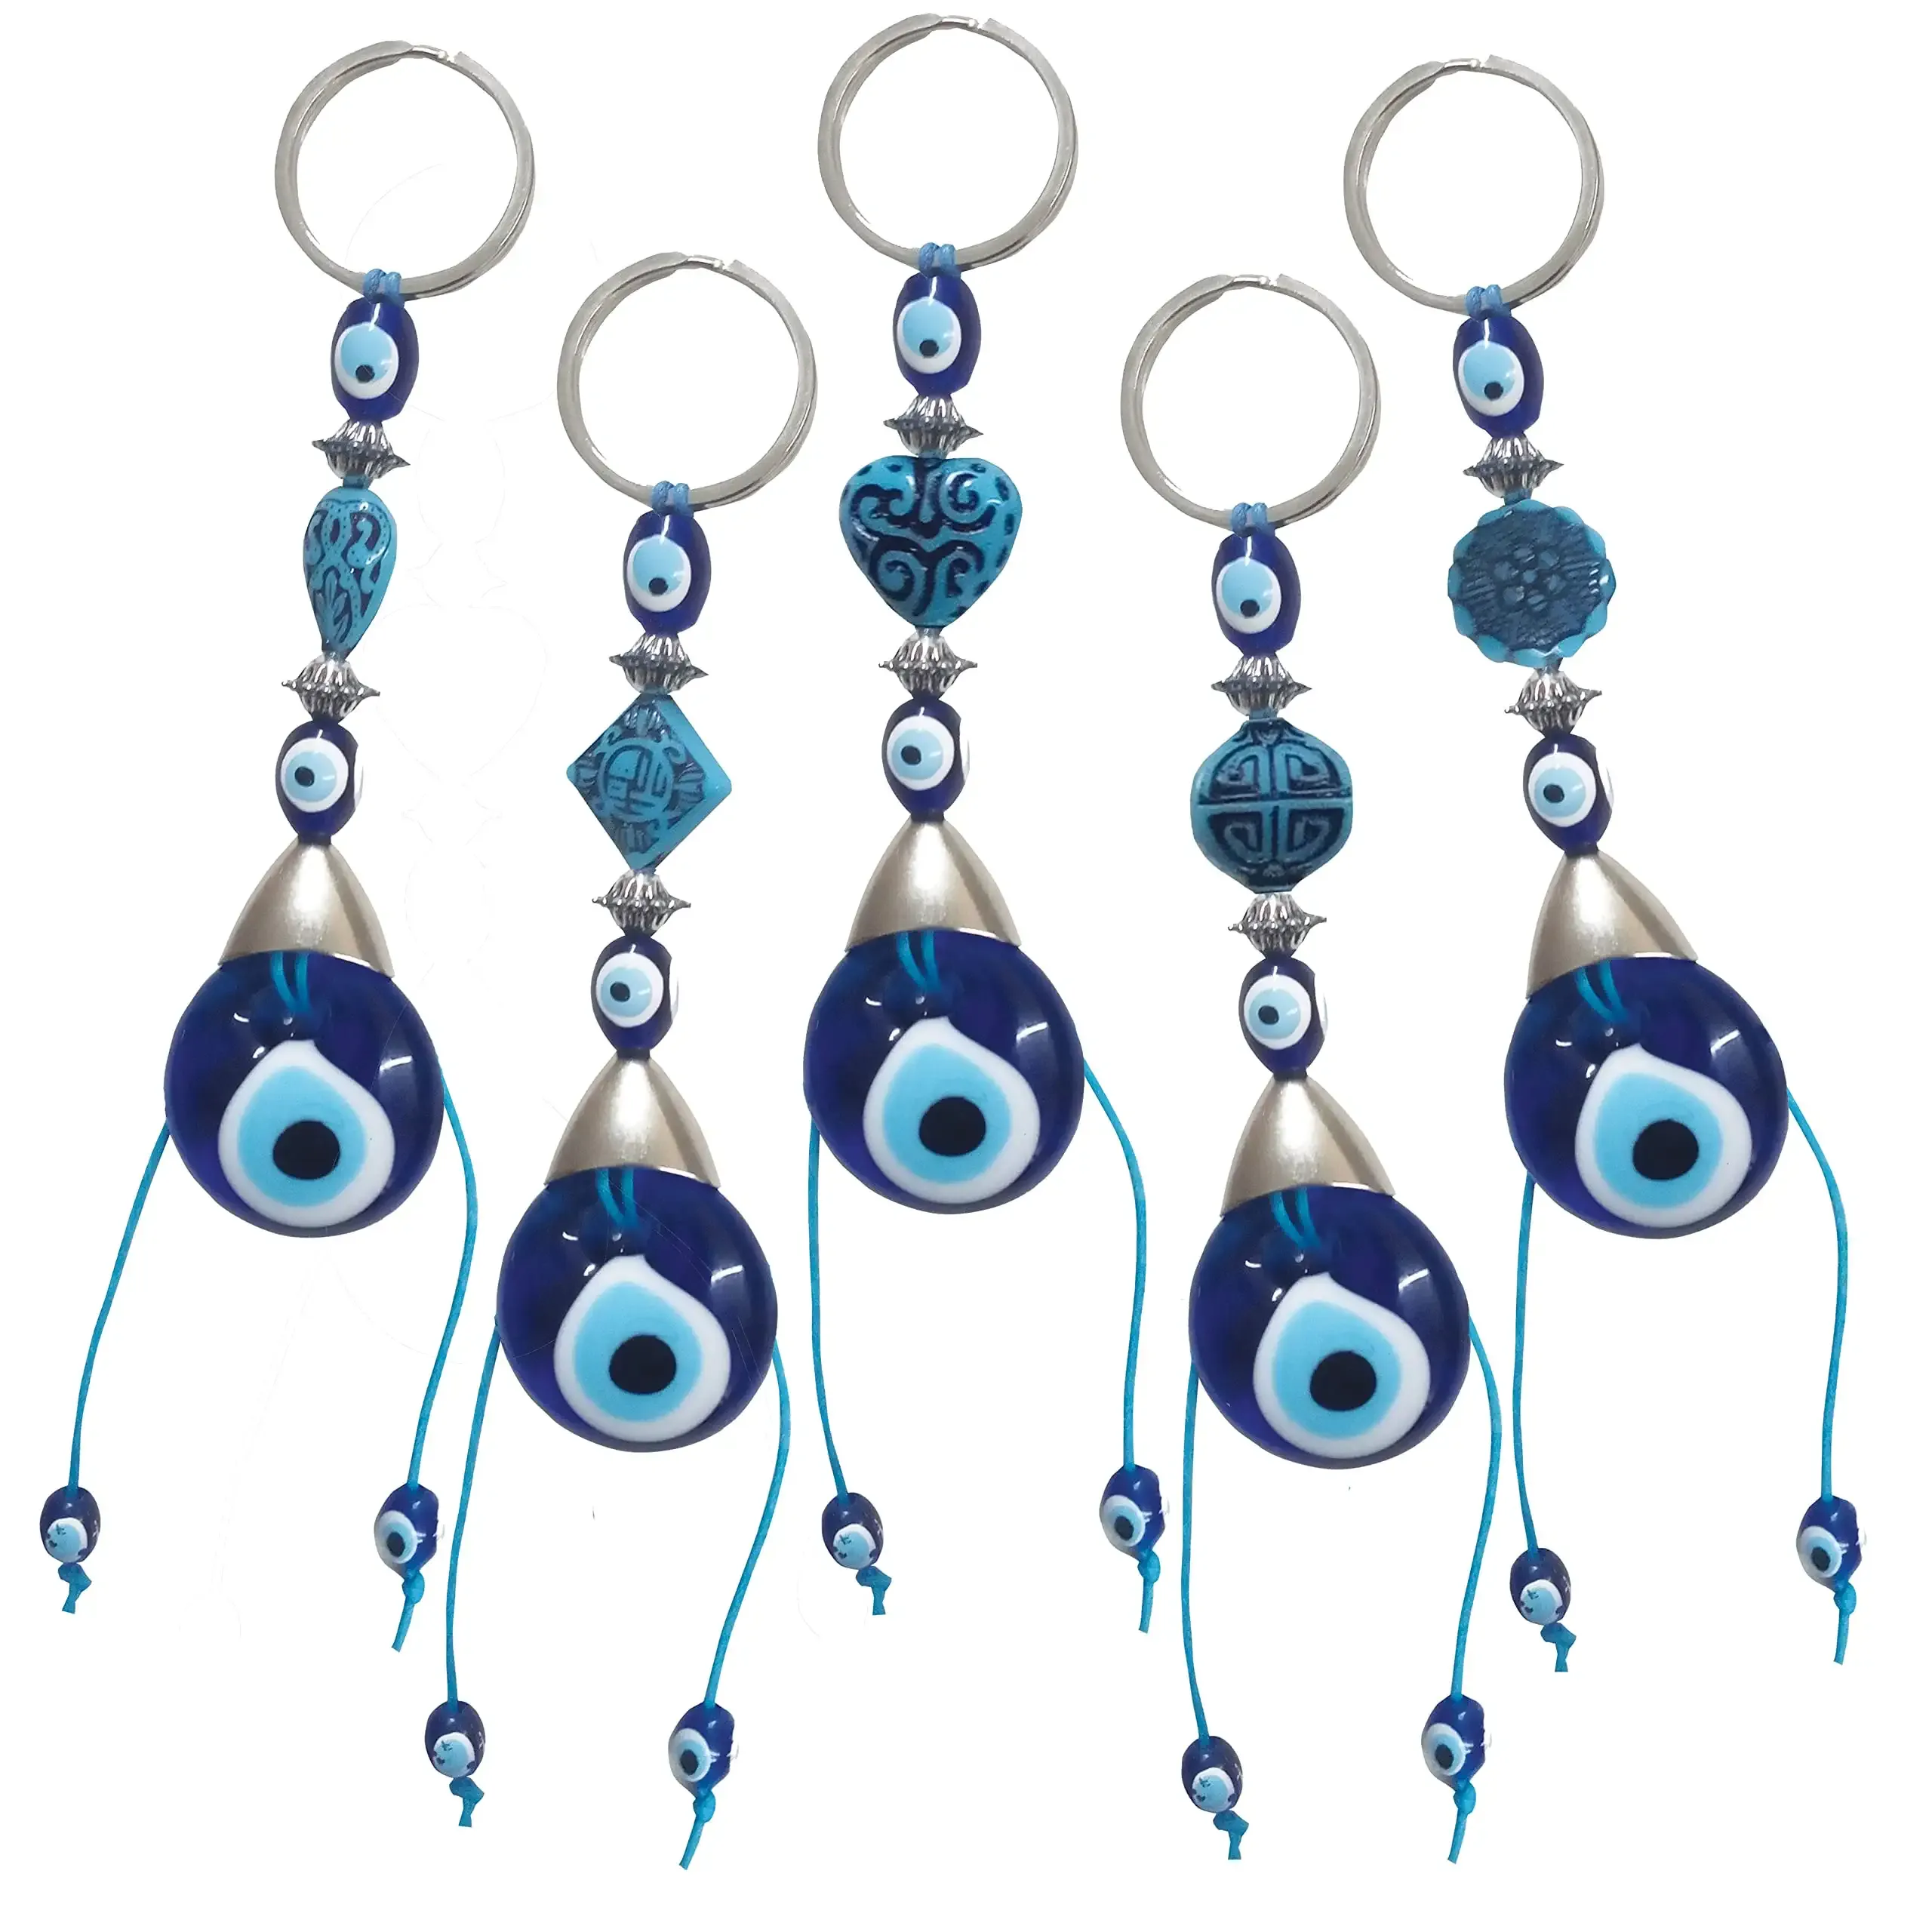 3ml handmade evil eye keychains soft colors bag charm glass eye amulet light blue